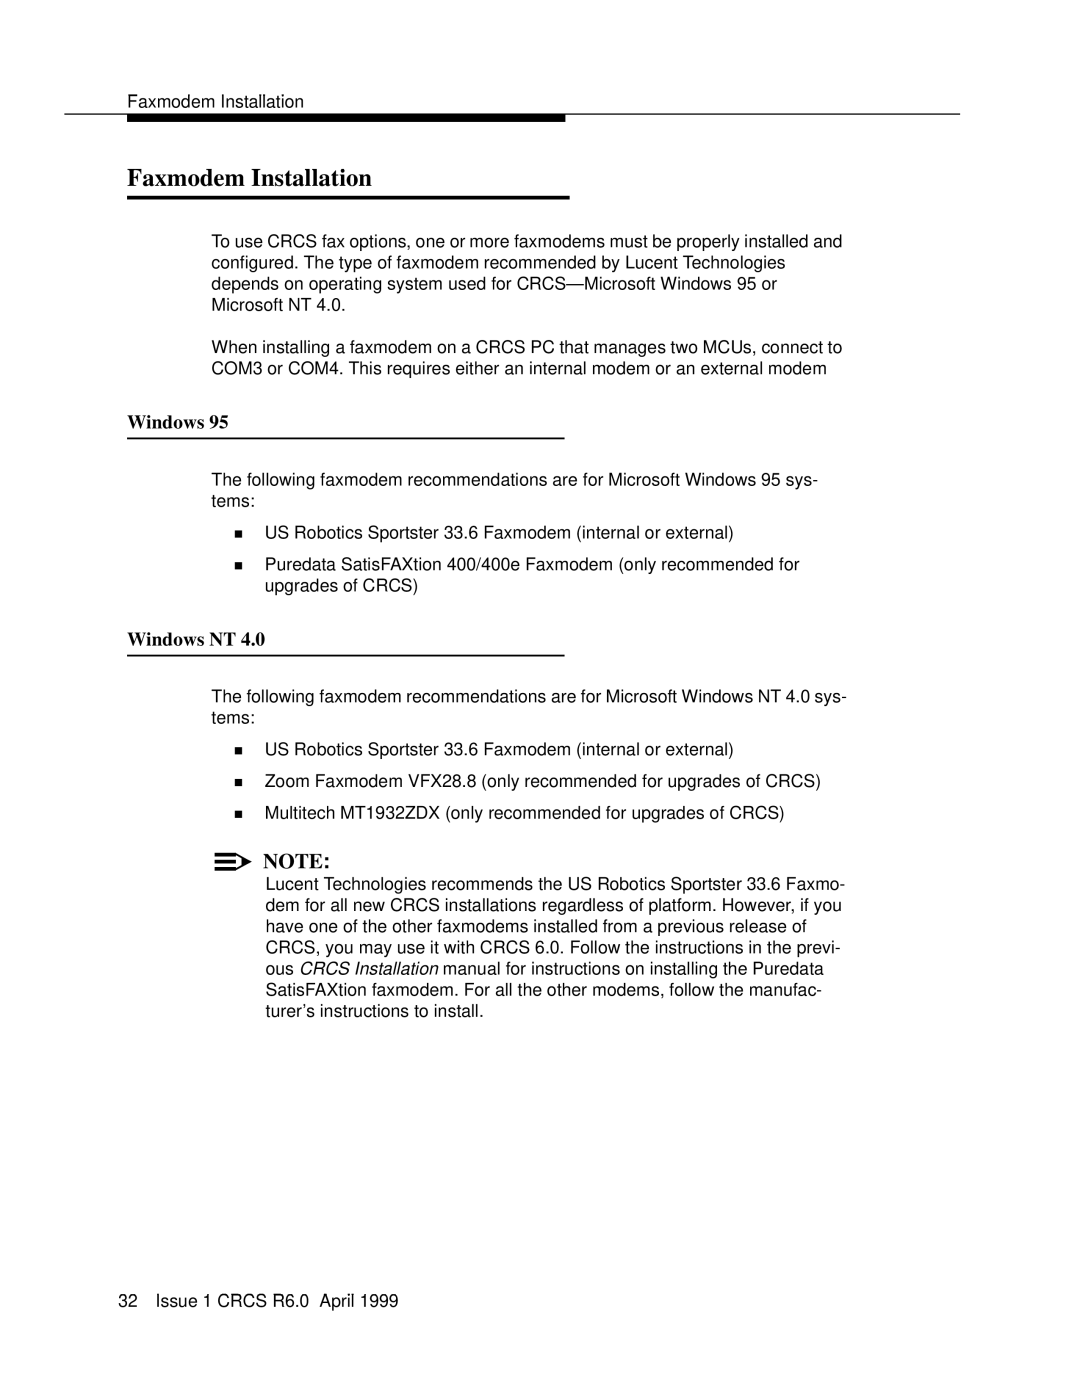 Lucent Technologies 6 manual Faxmodem Installation, Windows NT 